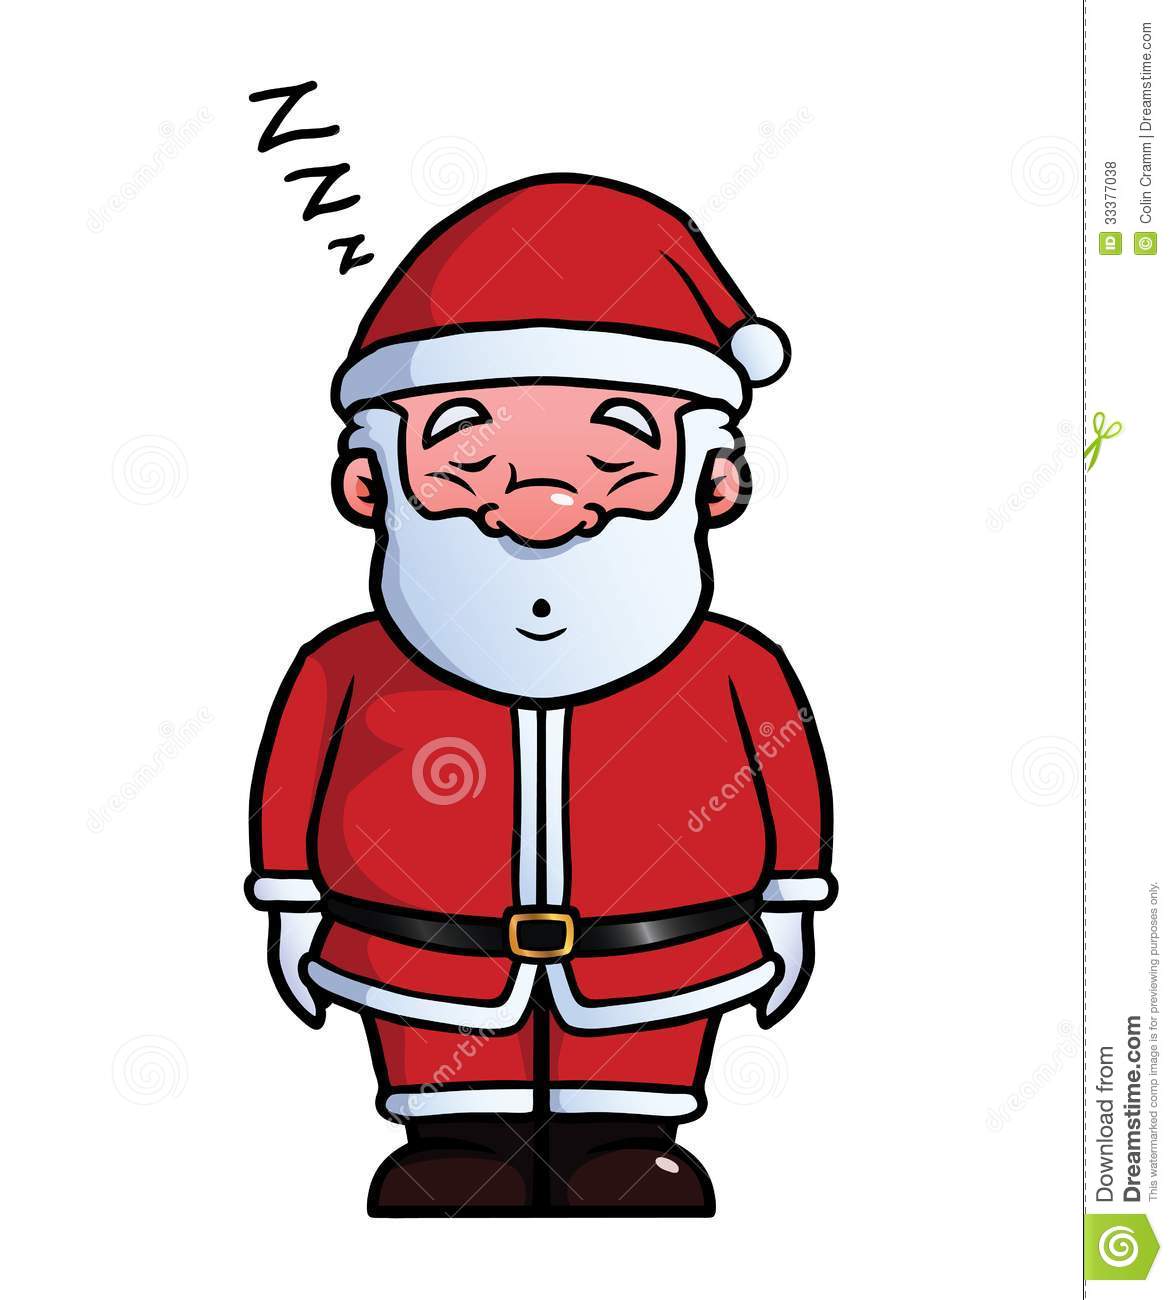 Santa Claus Sleeping And Snoring Royalty Free Stock Photos   Image    